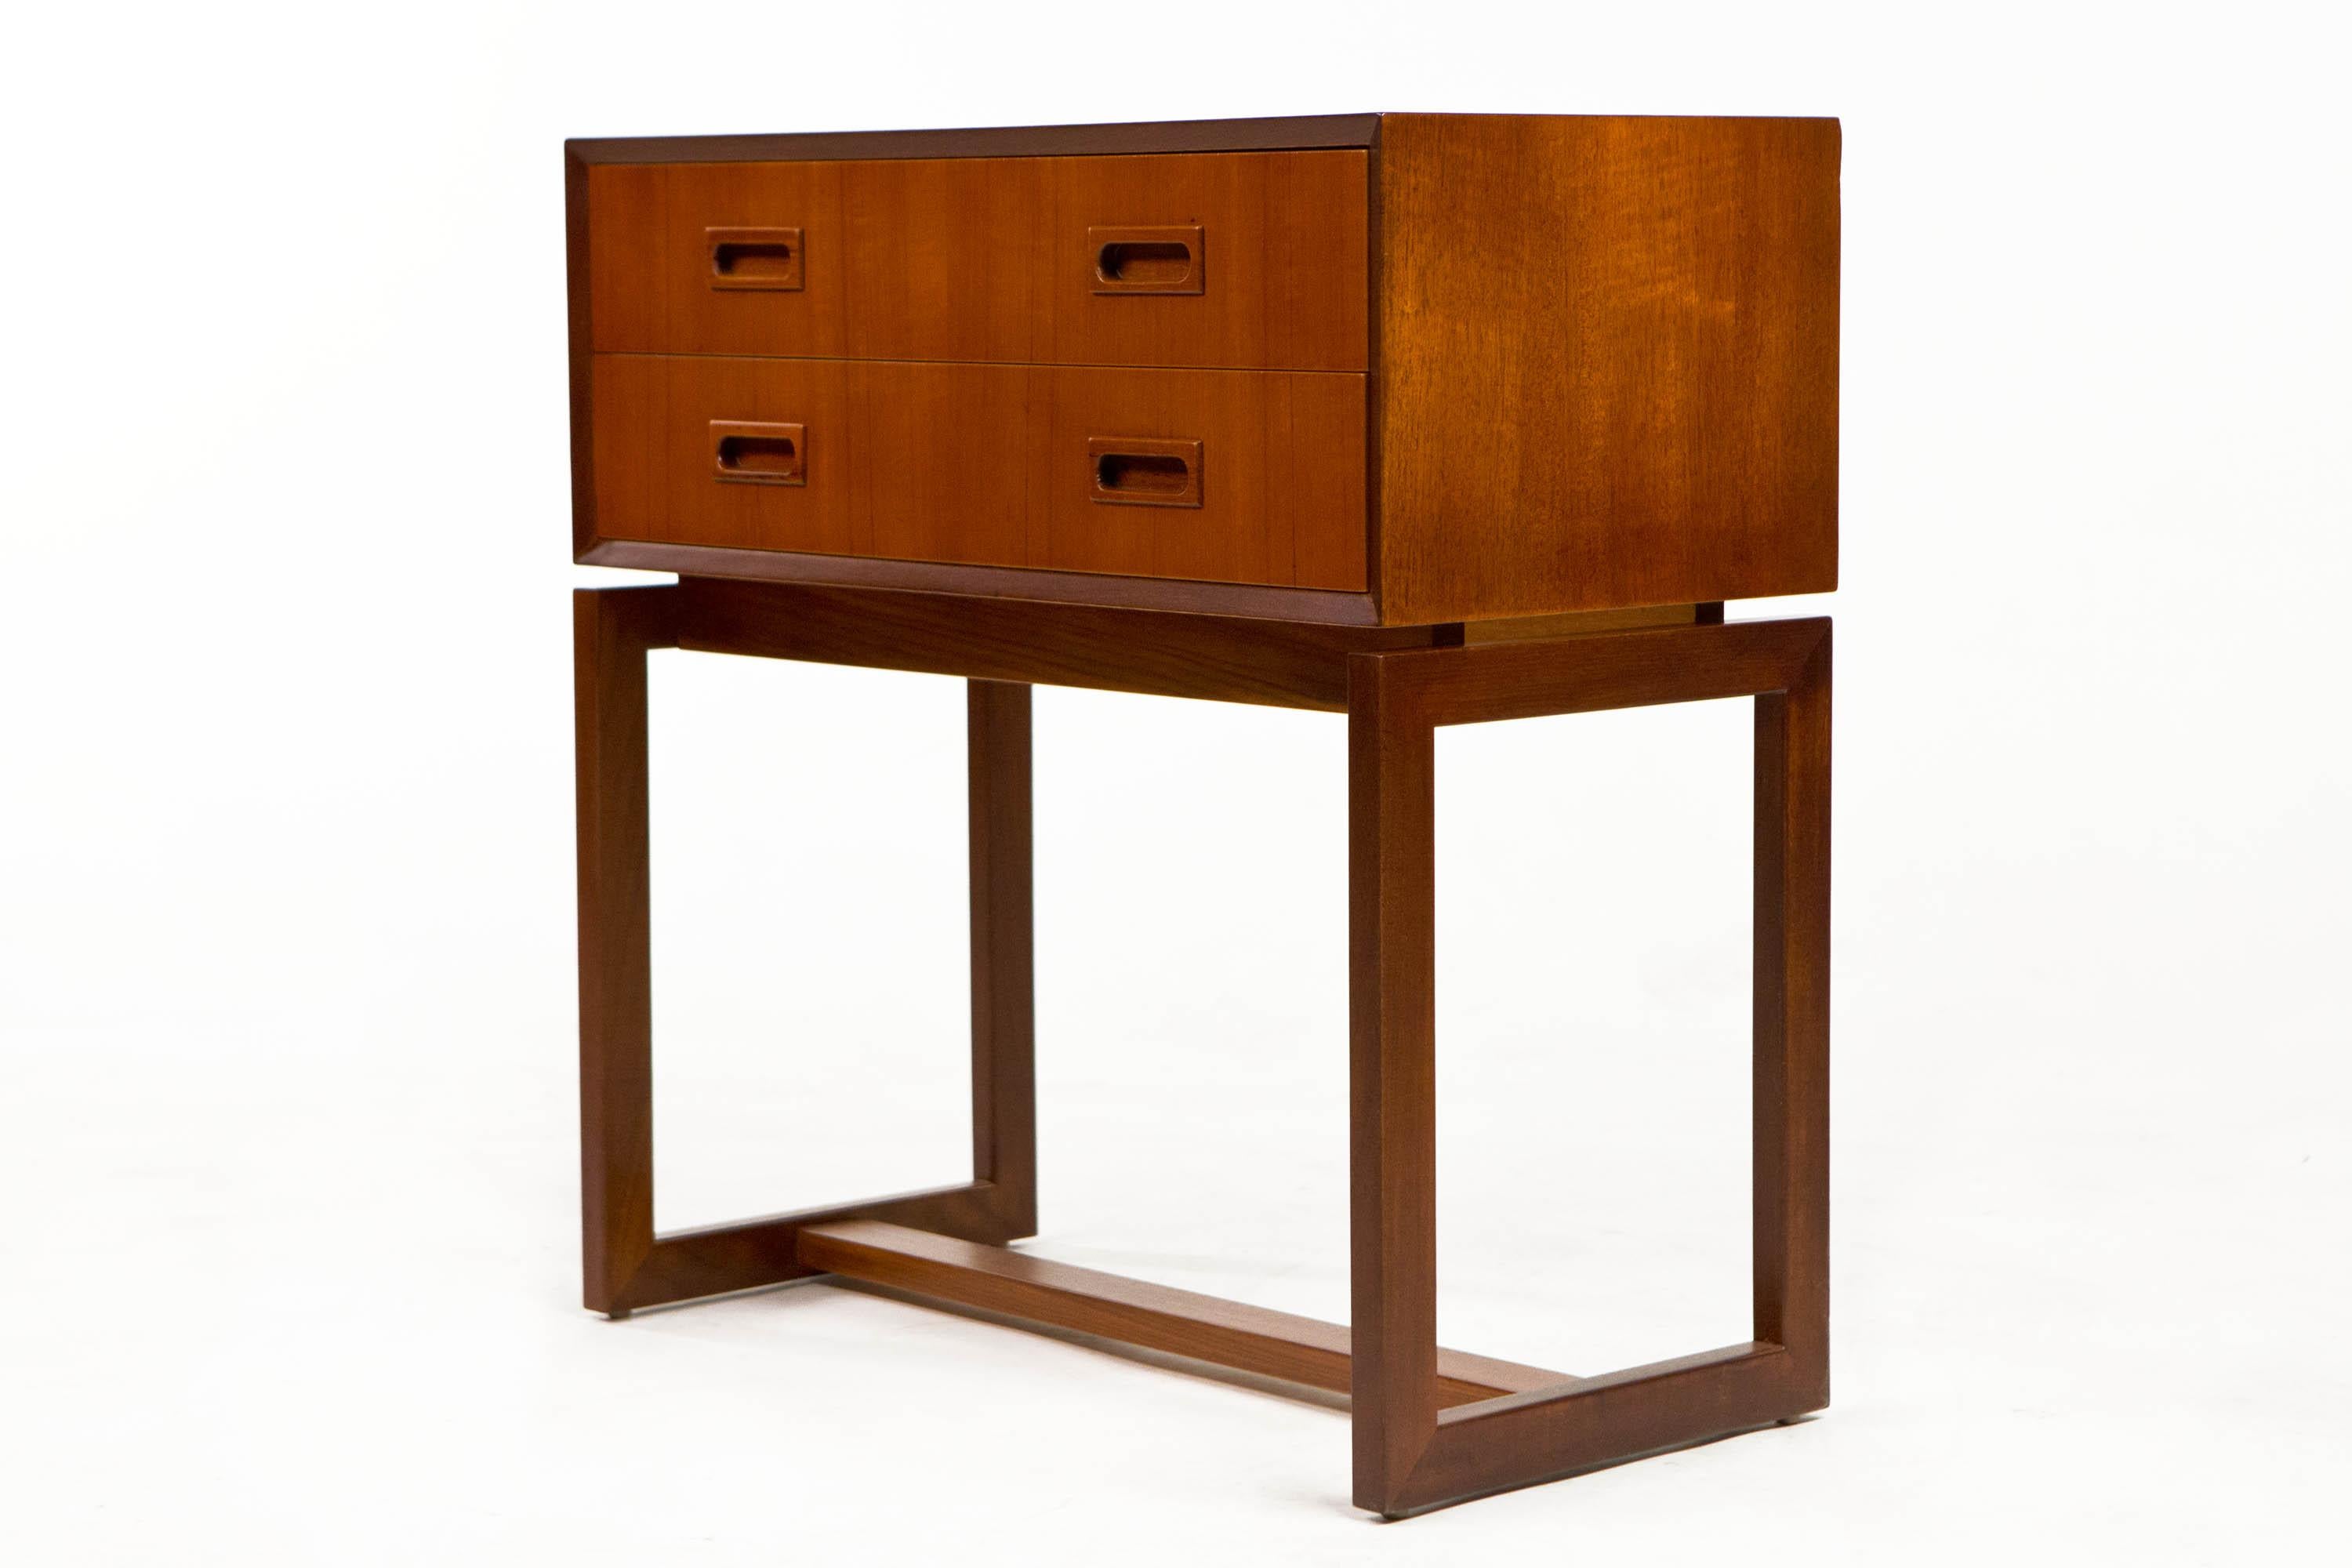 20th Century Teak Two Drawer Bureau with Beveled Edge, Danish Design 1950's For Sale